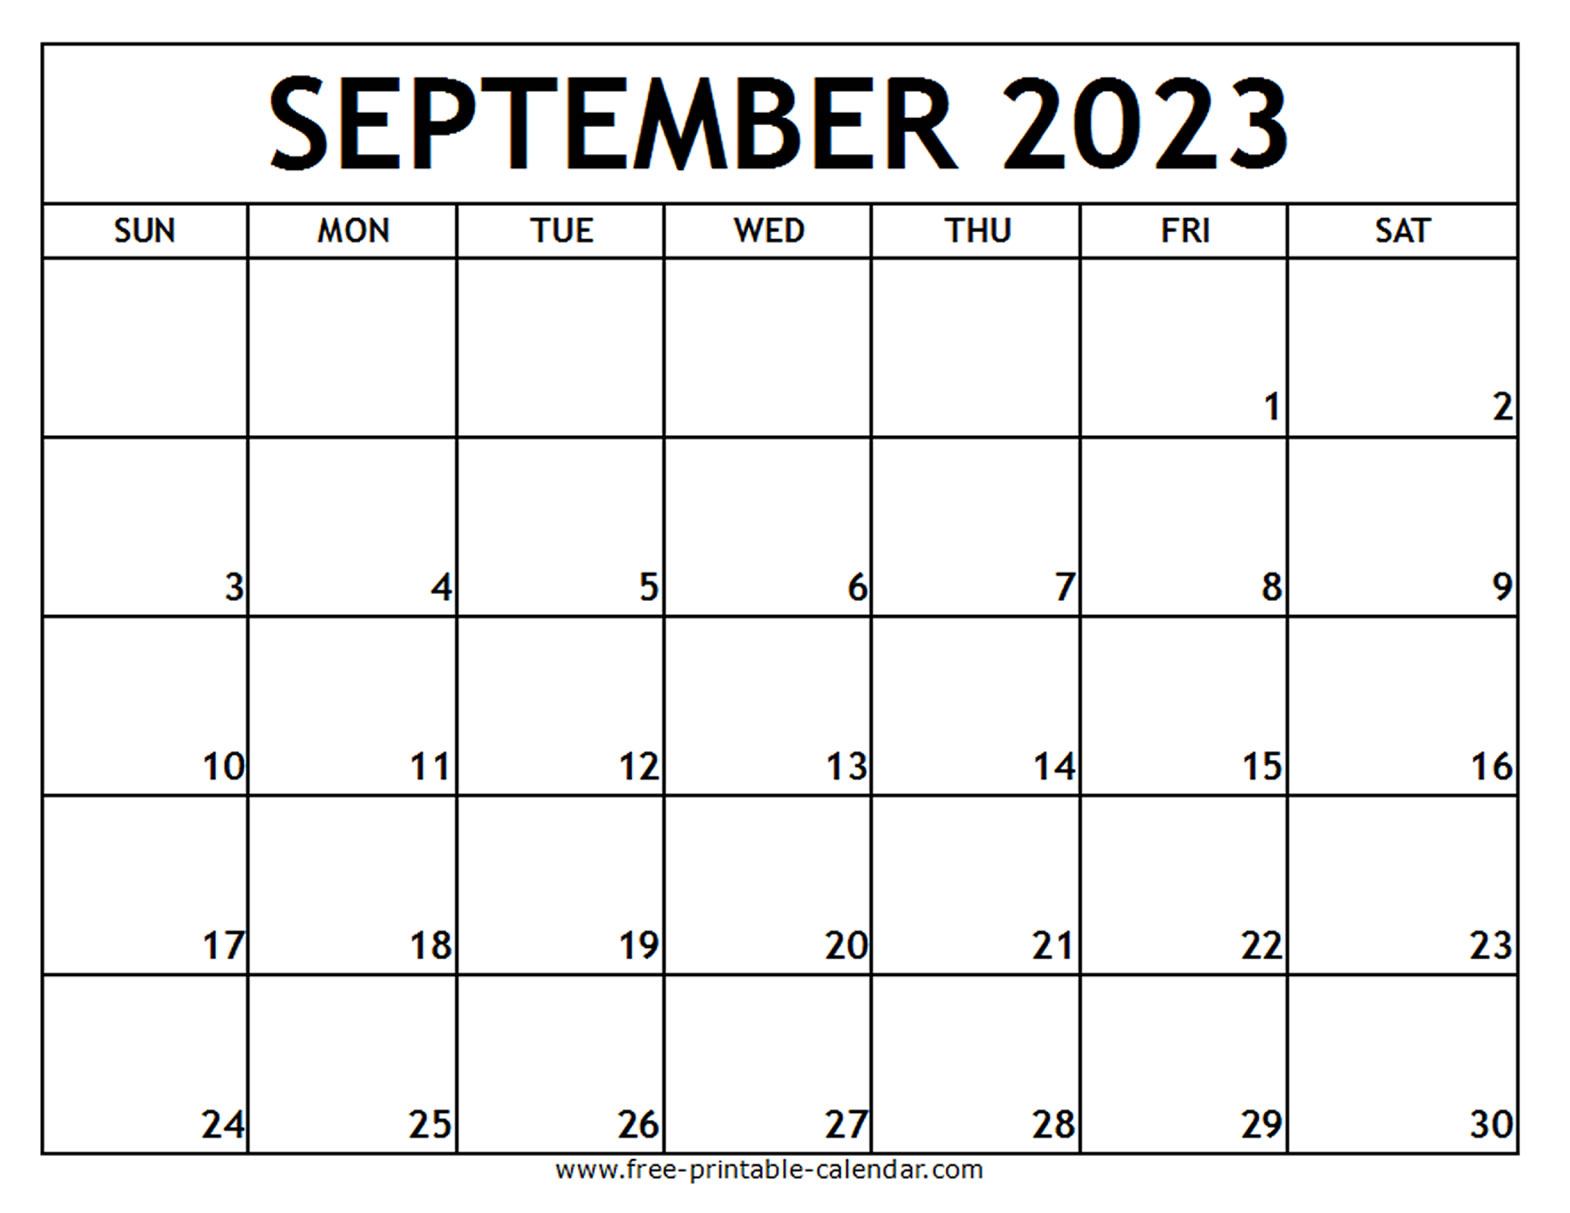 september-2023-printable-calendar-free-printable-calendar